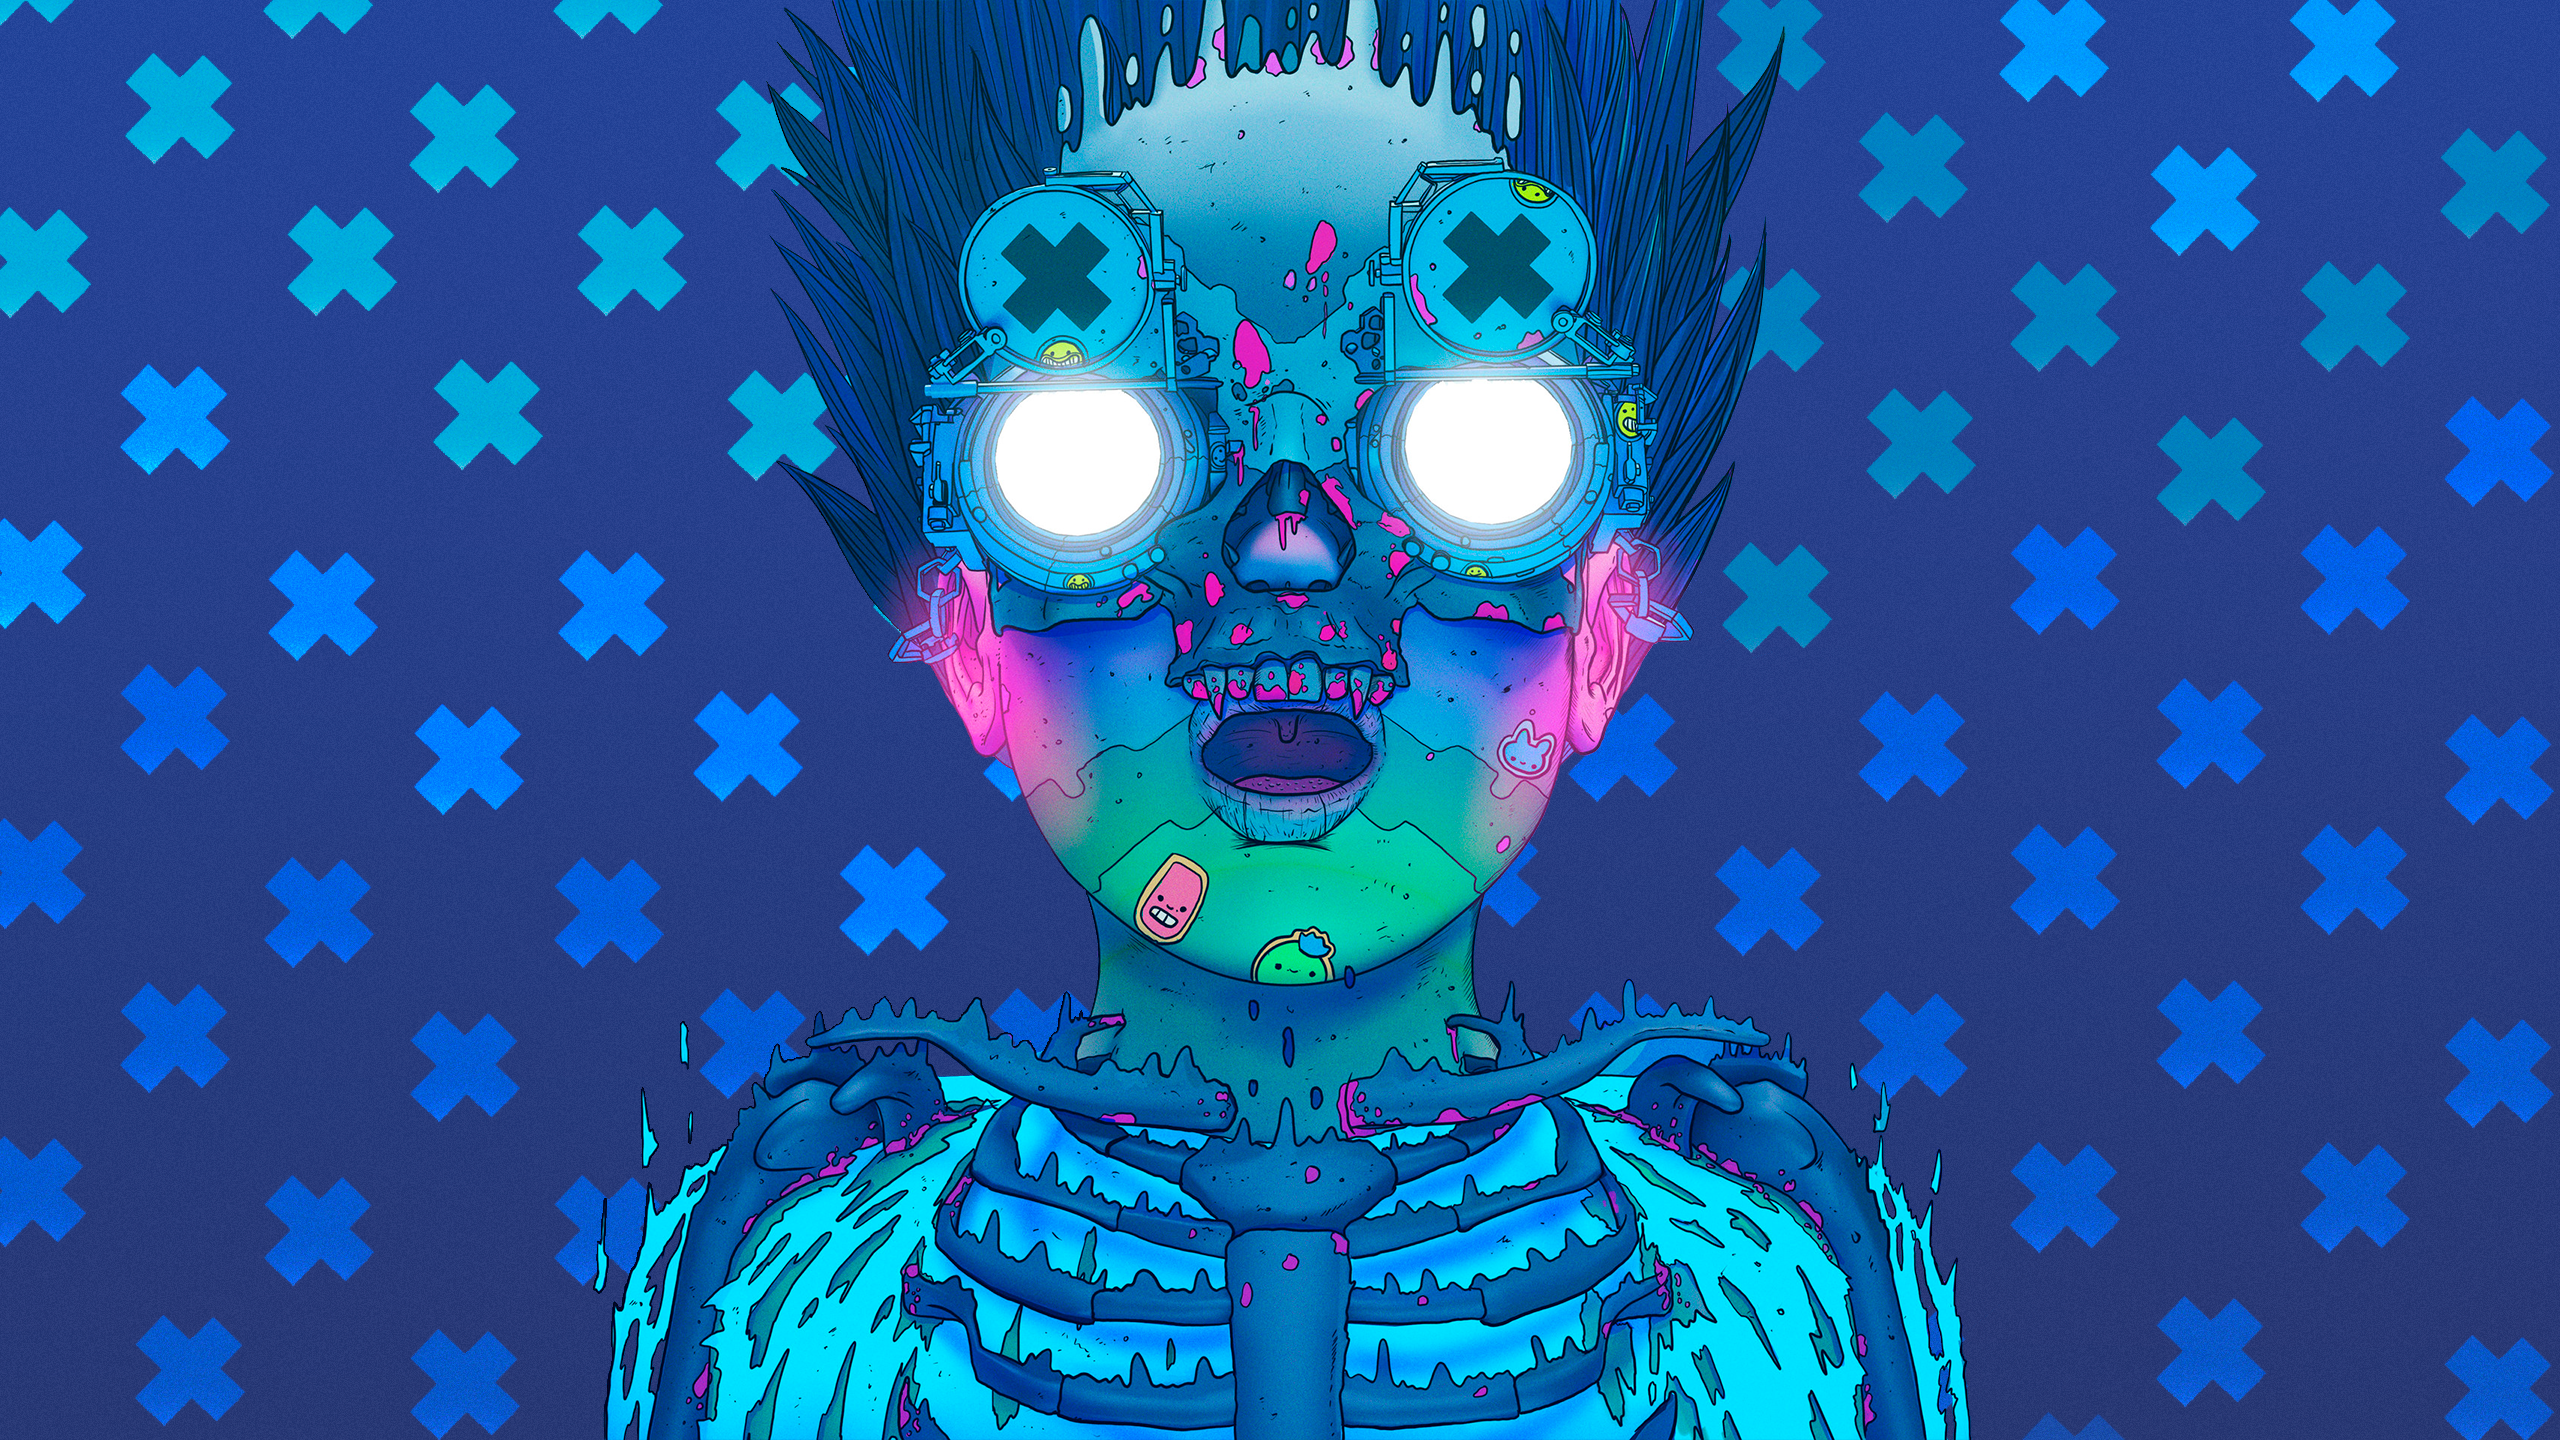 General 2560x1440 Nick Sullo techno punk cyberpunk illustration digital art artwork blue blue background fantasy art steampunk